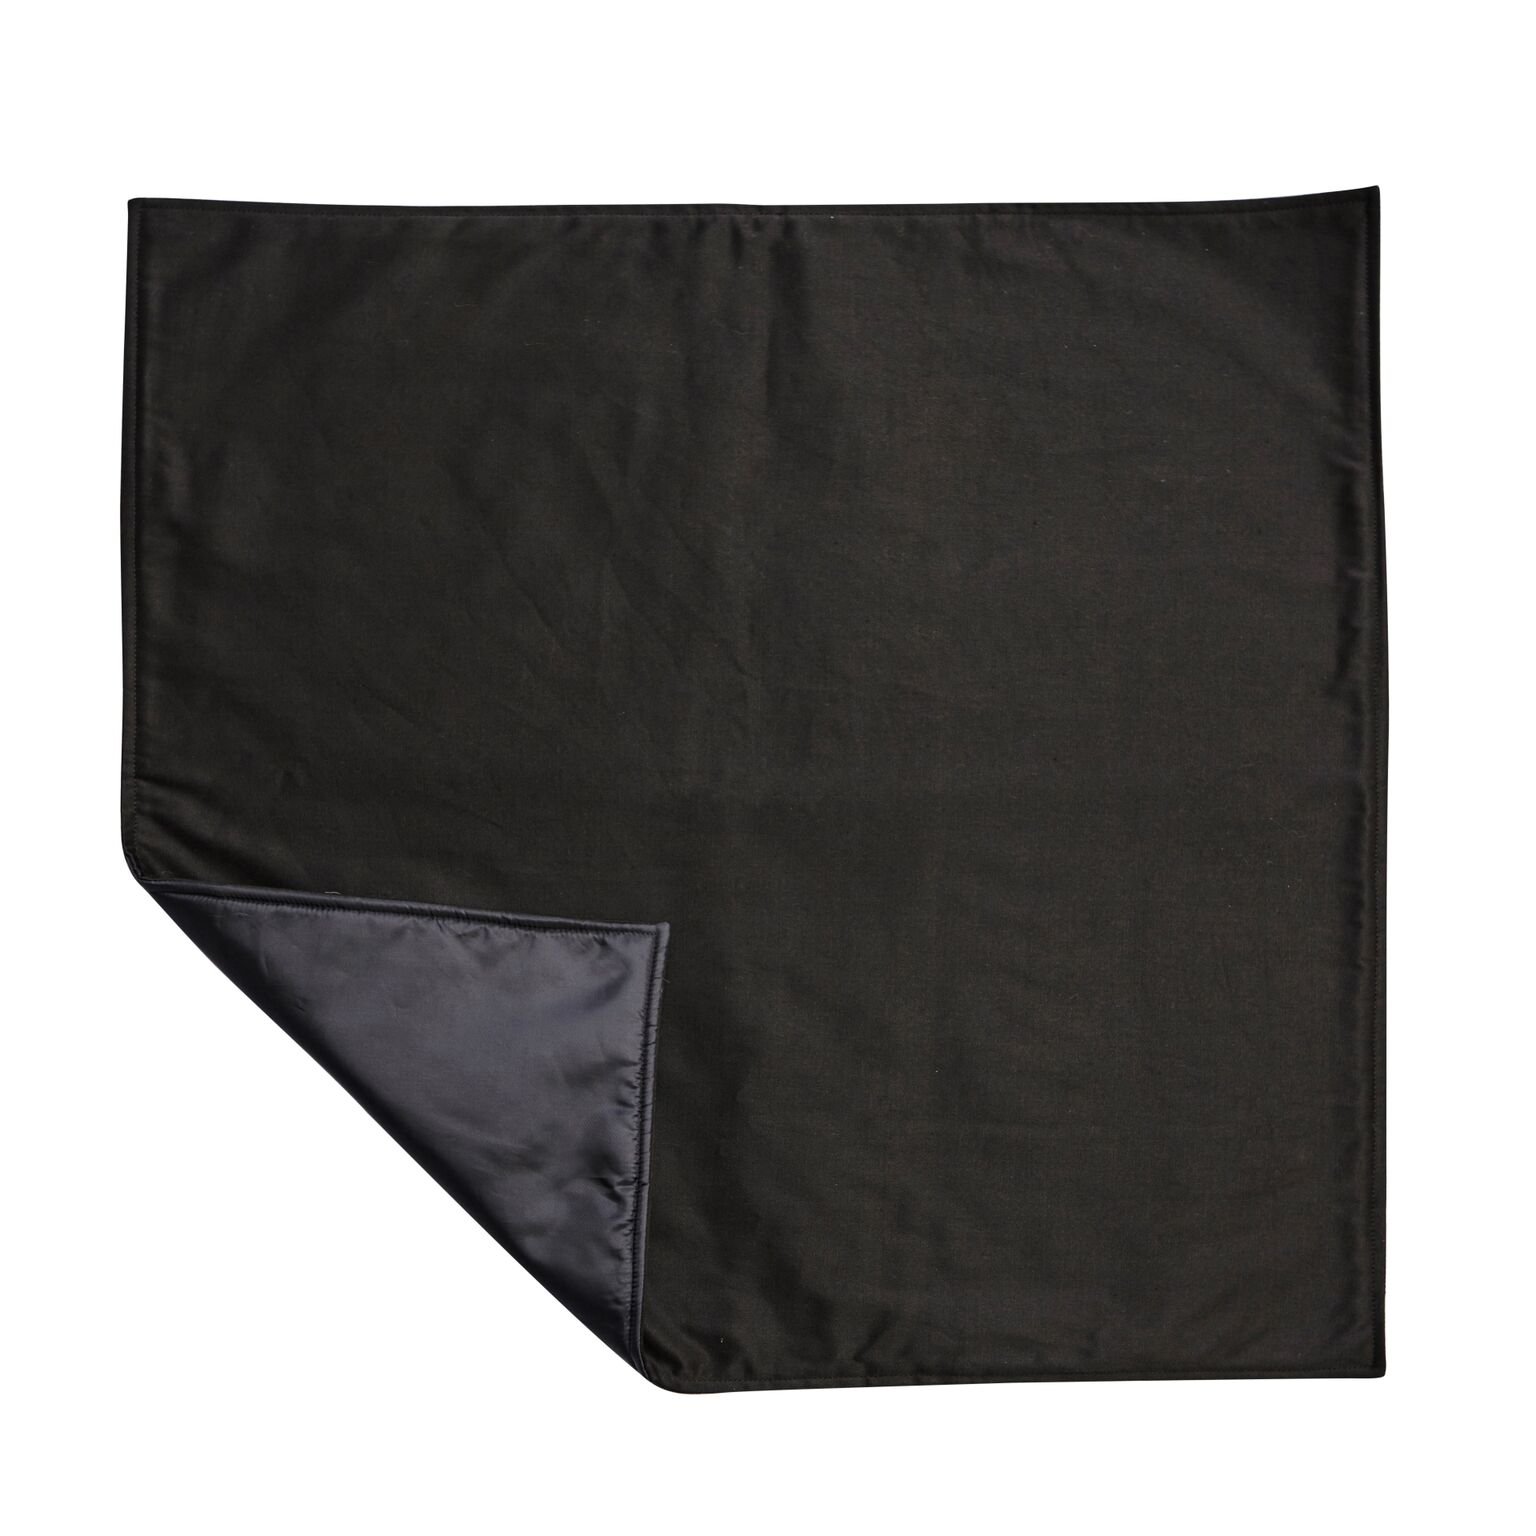 RadiCover - Anti-Radiation Surfer Blanket - Black